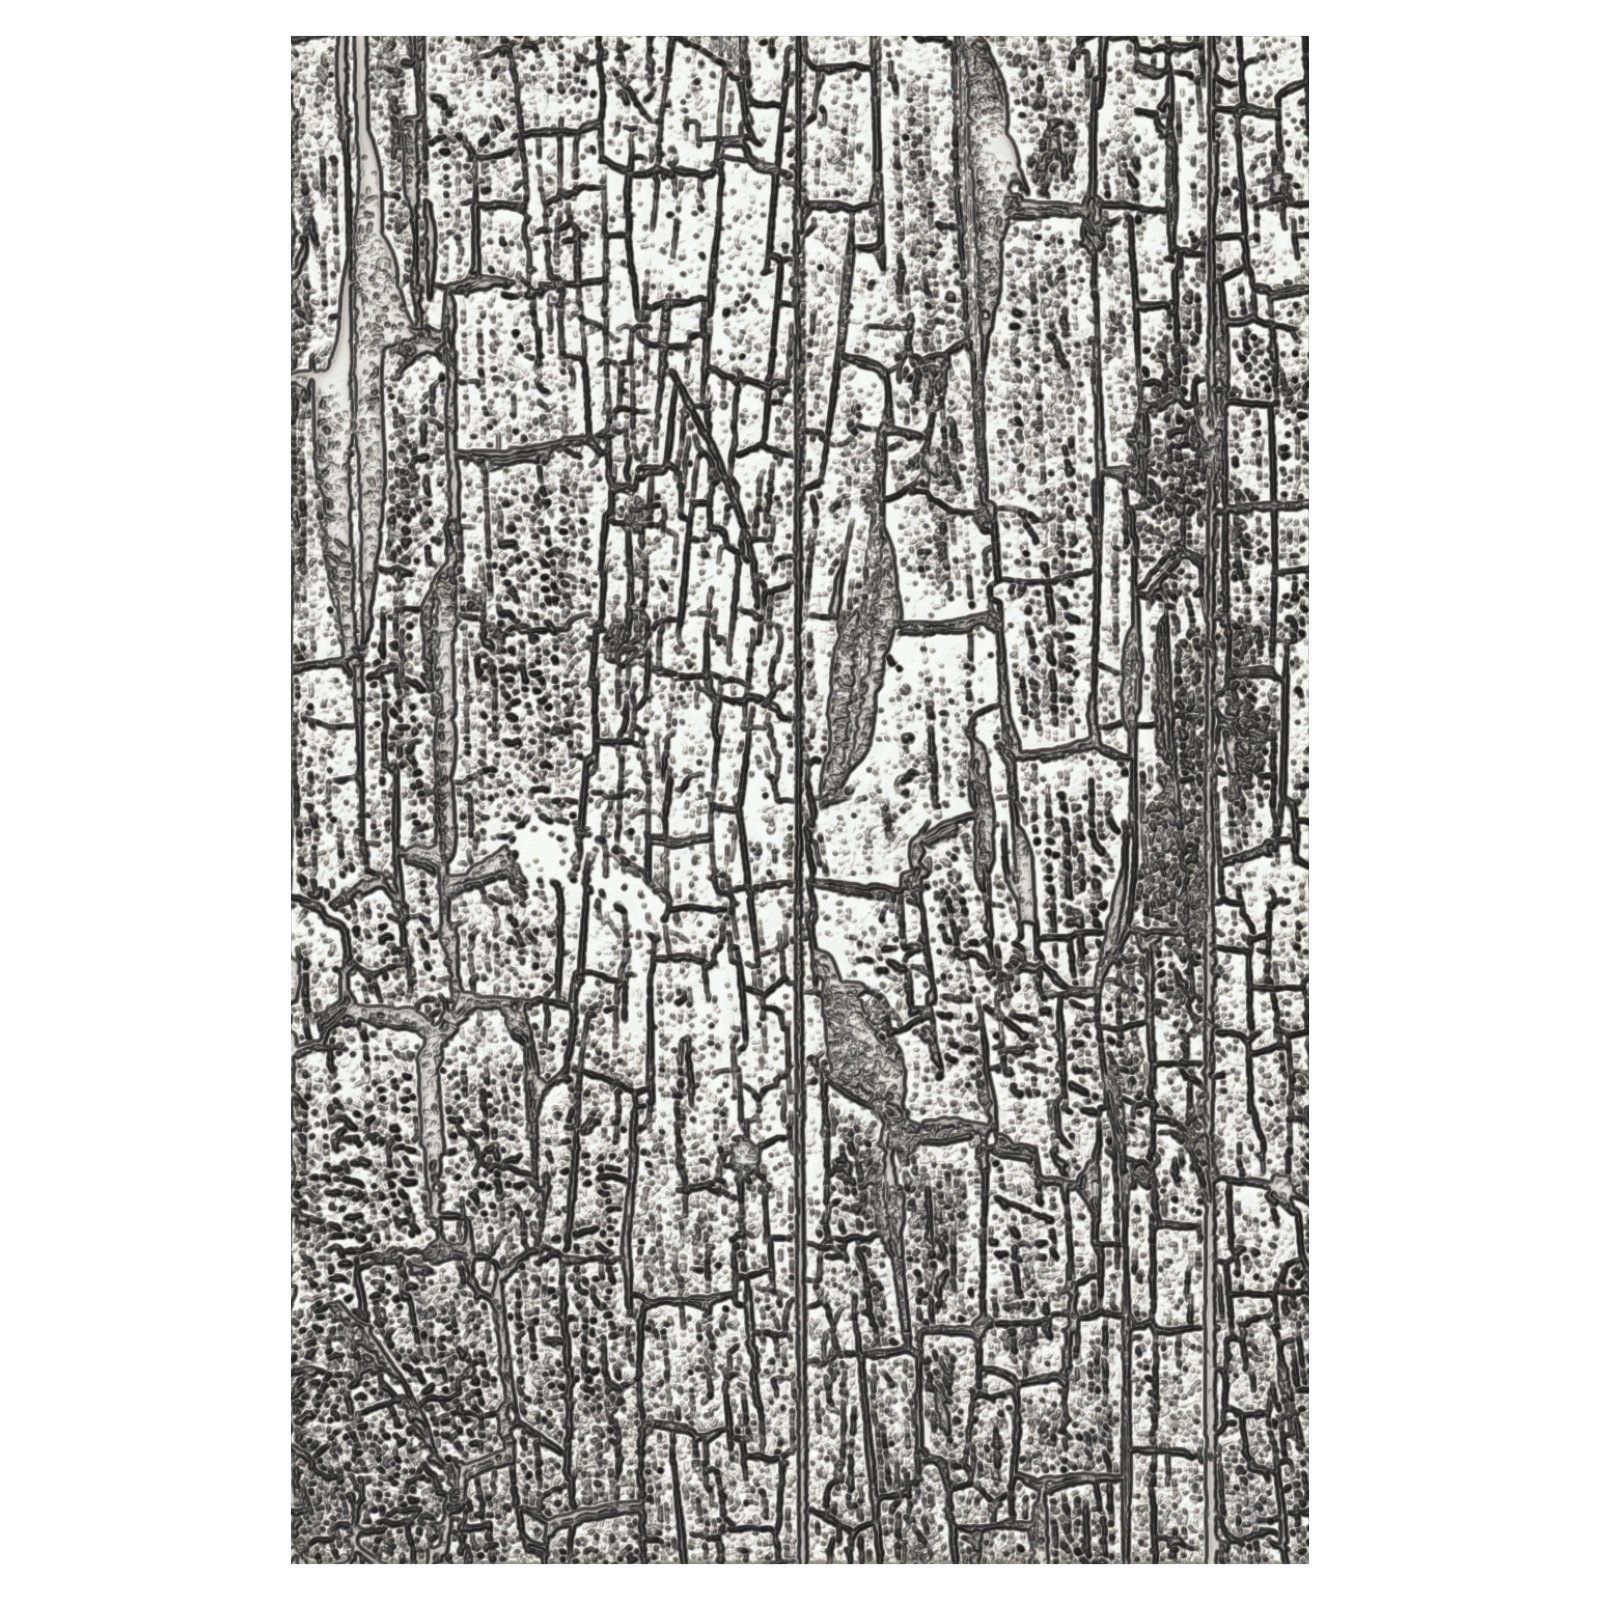 Sizzix Motivschablone Cracked by Tim Holtz, 10,8 cm x 15,9 cm